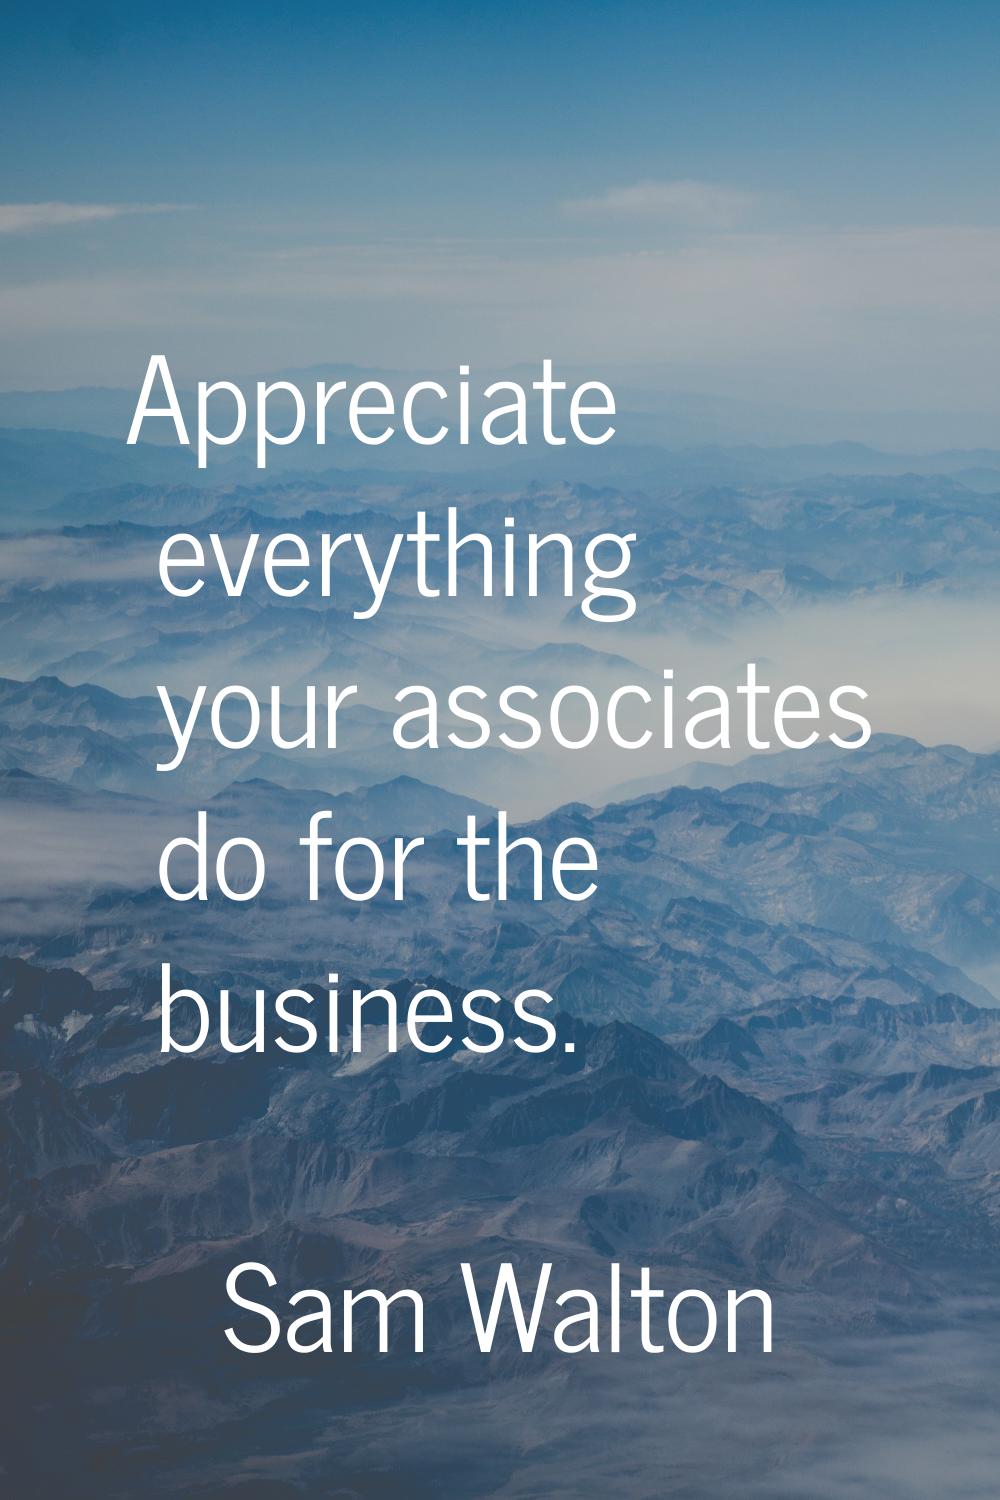 Appreciate everything your associates do for the business.